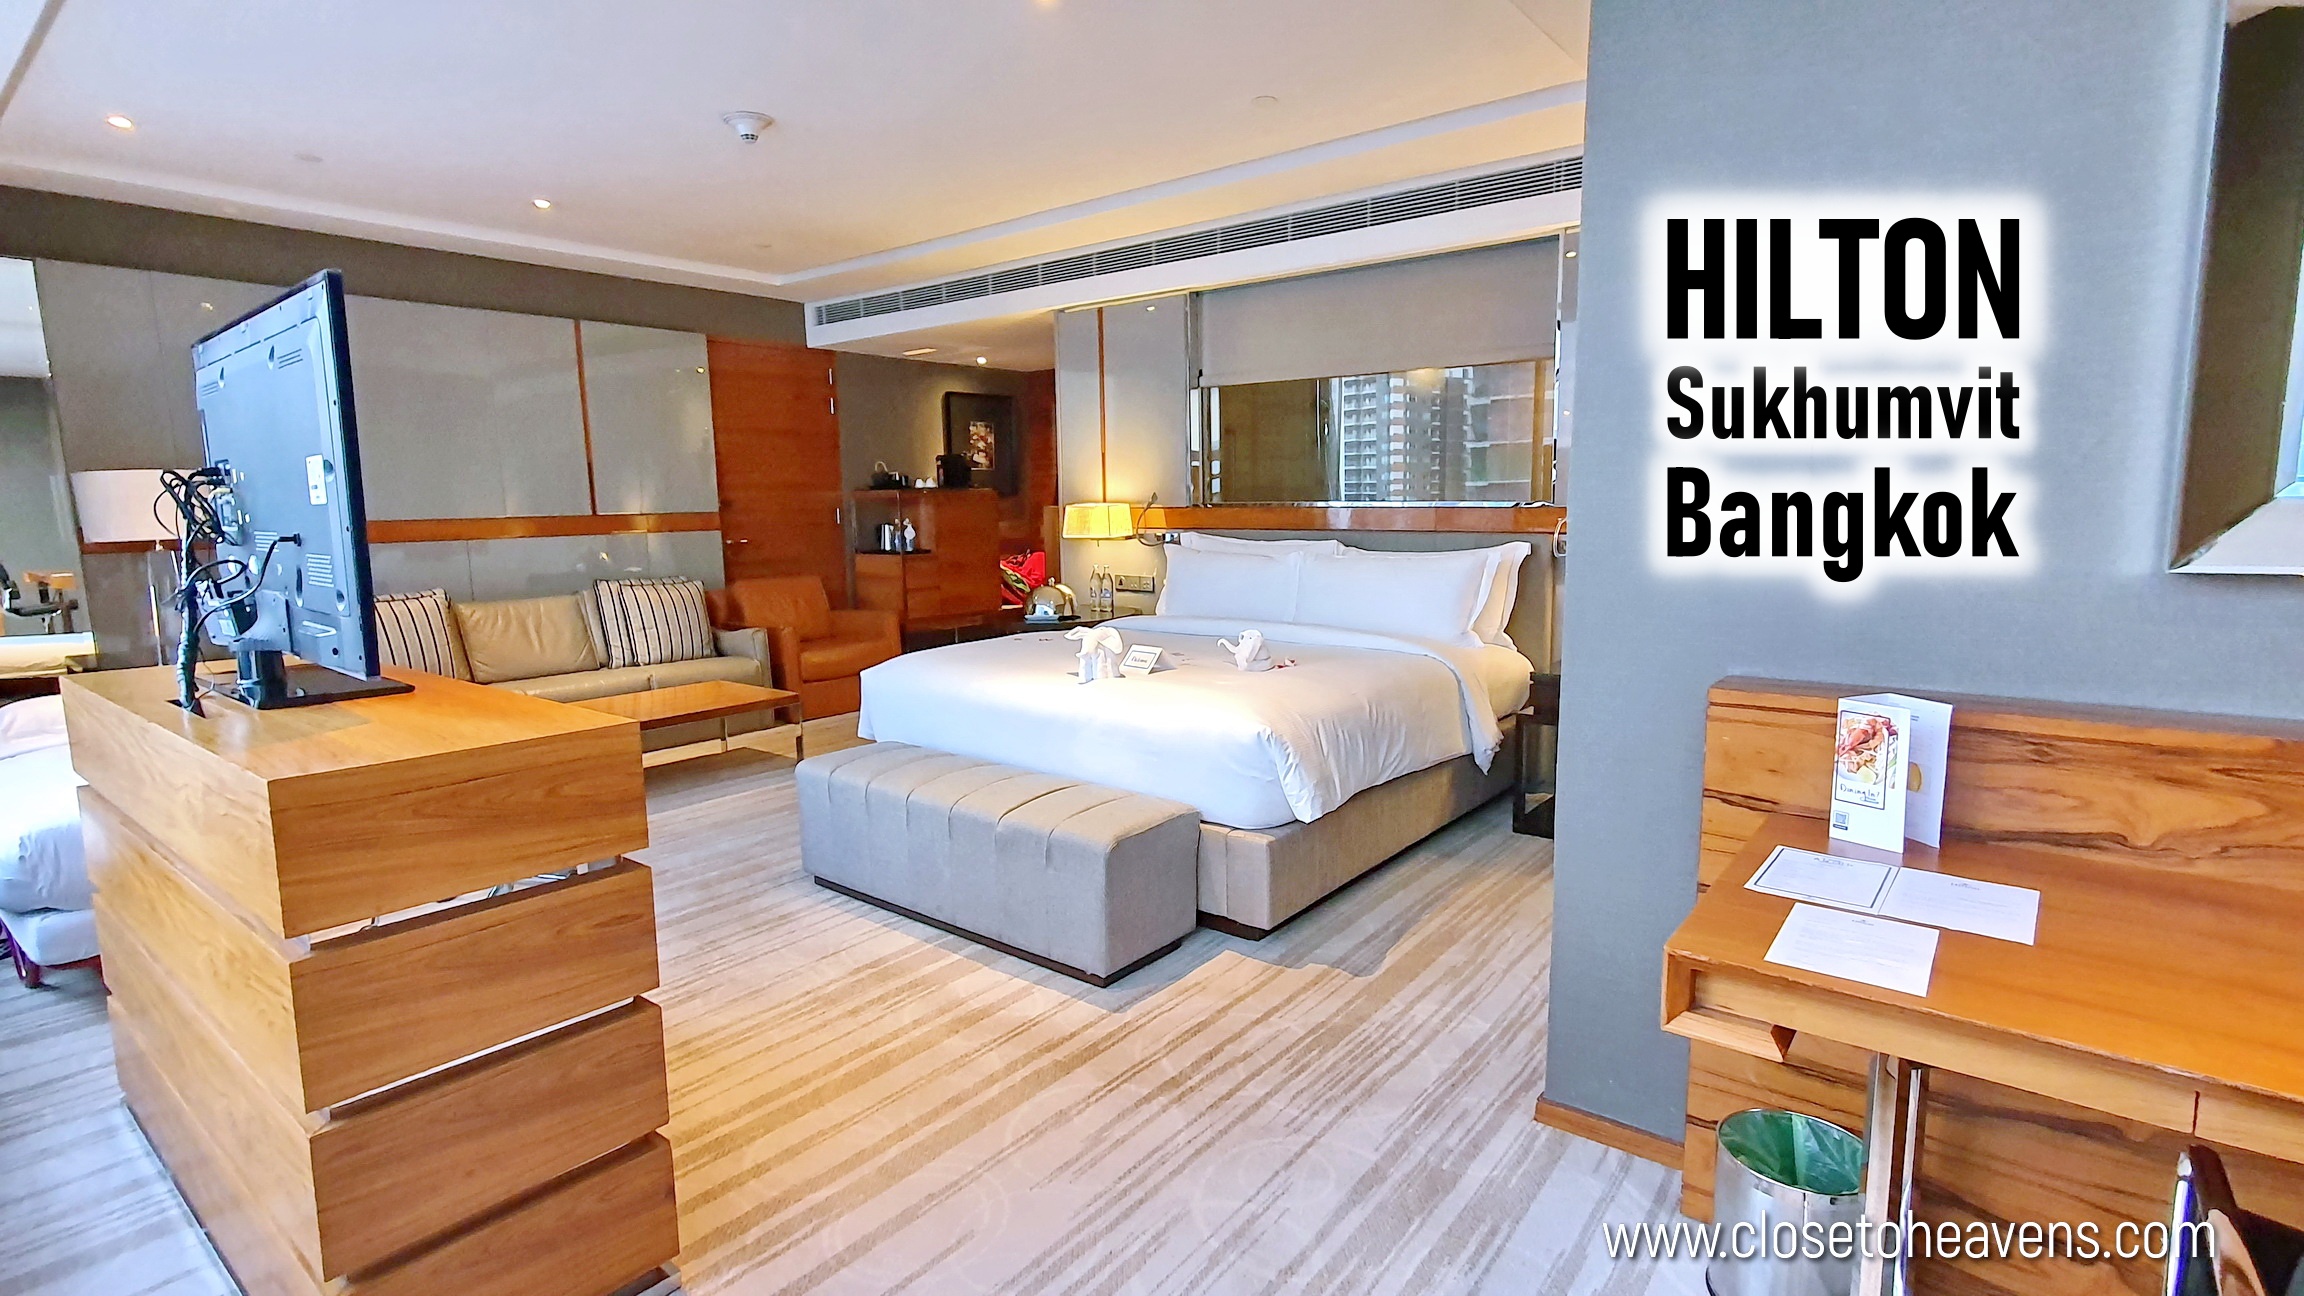 Hilton Sukhumvit Bangkok ห้องพัก + บุฟเฟ่ต์อาหารเช้า